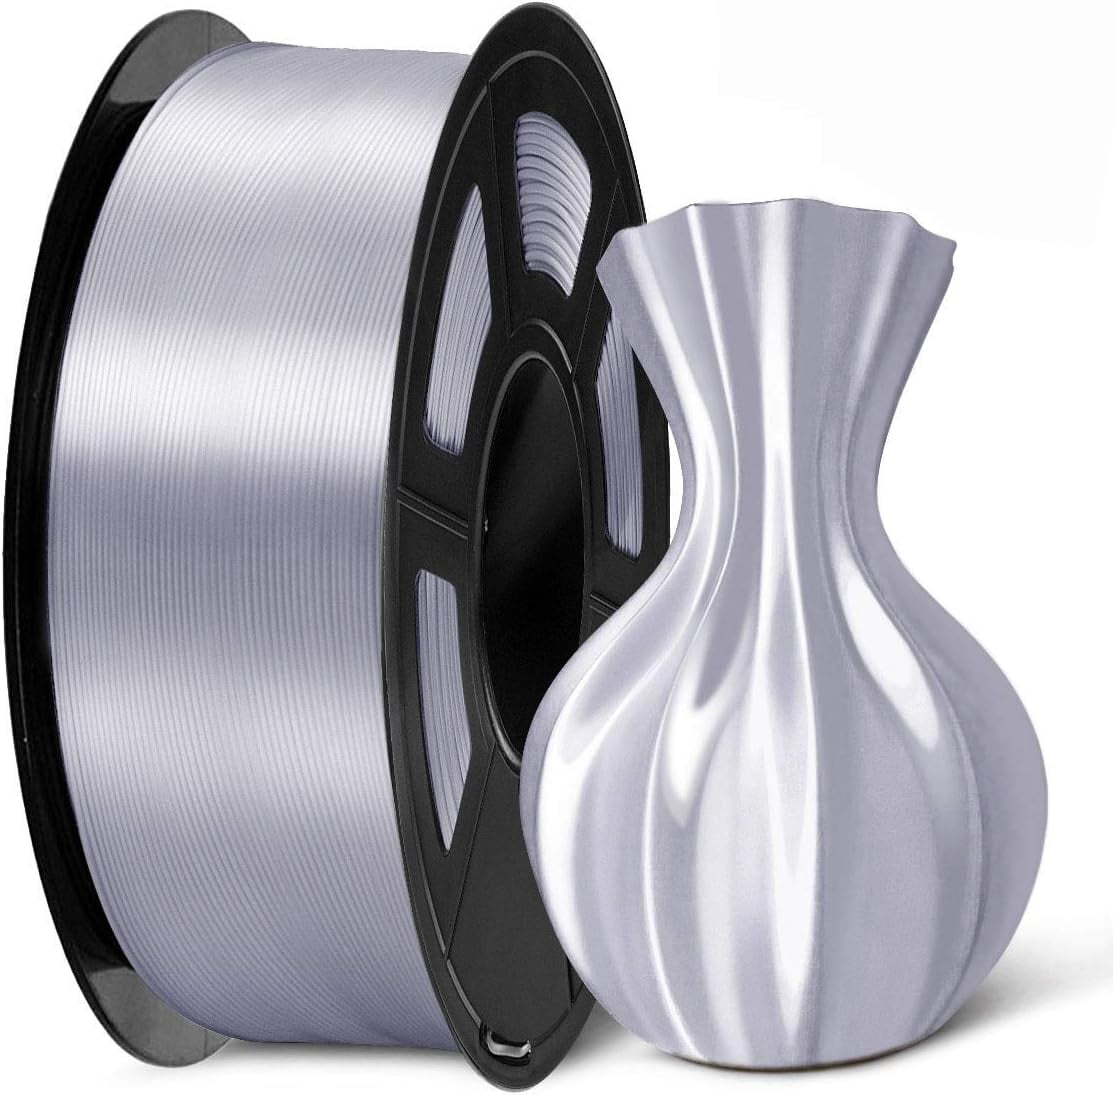 SUNLU Silk PLA+ 3D Printer Filament,1.75mm,Dimensional Accuracy +/- 0.02  mm,1kg(2.2LBS)/ Spool,Silver 